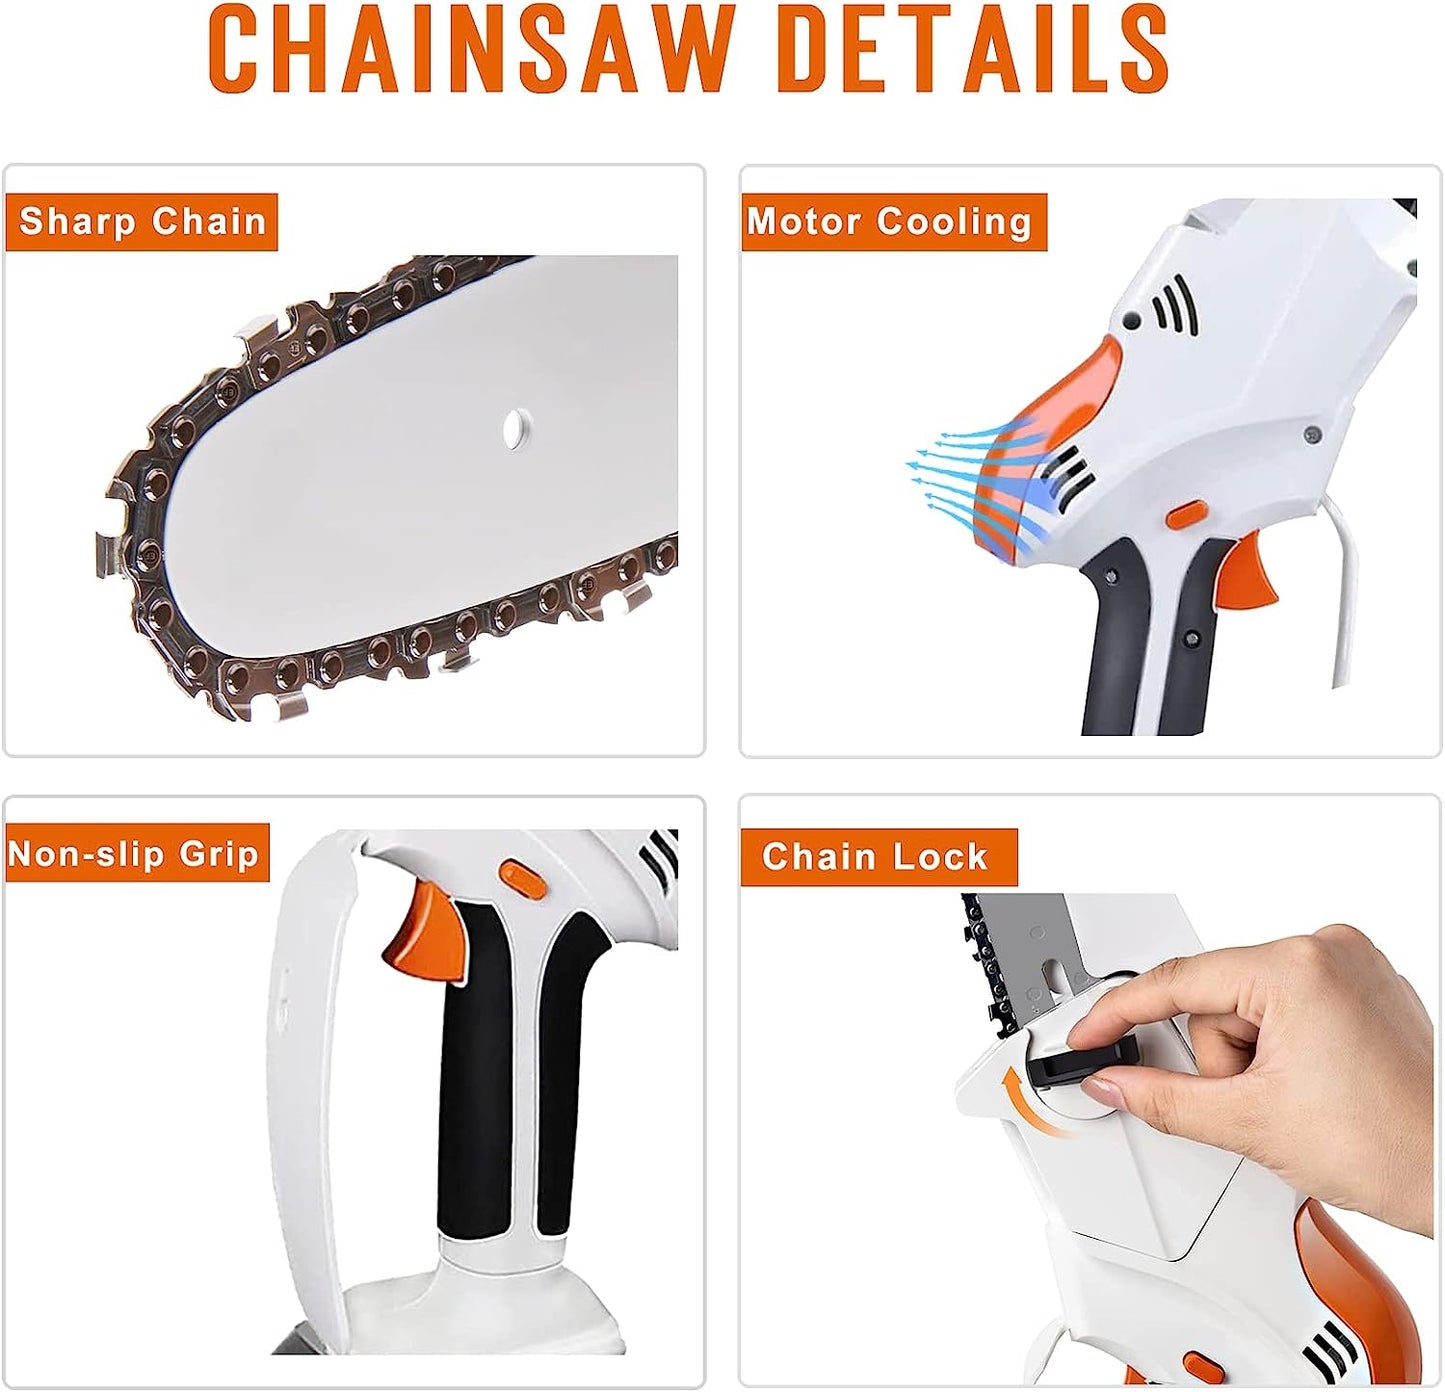 STIHL Mini Chainsaw Cordless Electric Chainsaw